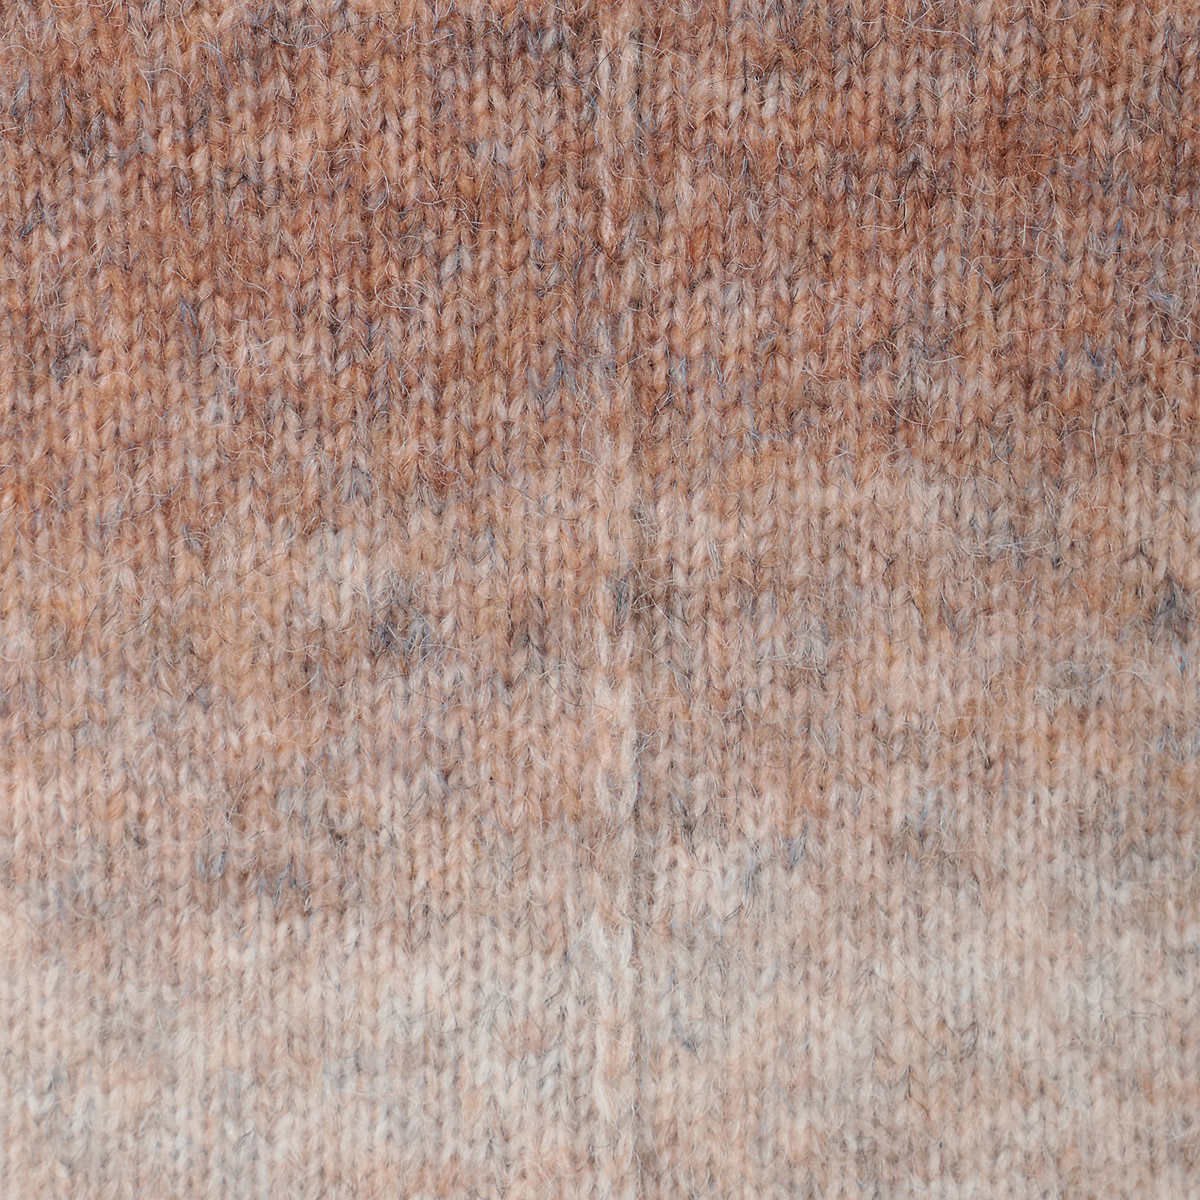 Briggs Women's Cozy V-Neck Soft Ombre Space Dye Soft Knitt Sweater